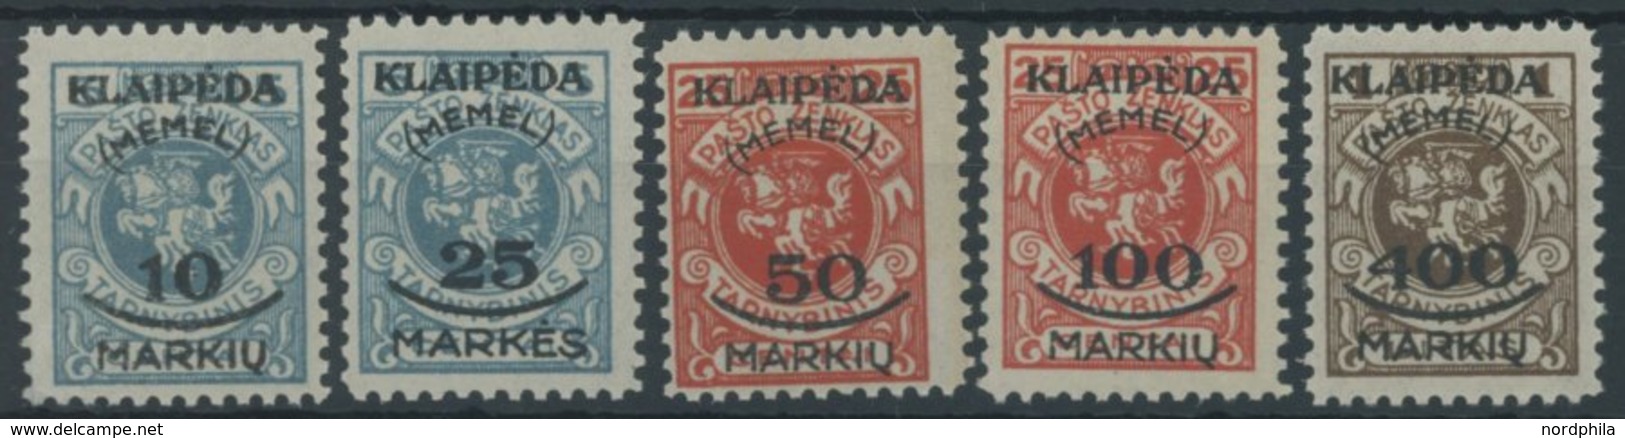 MEMELGEBIET 124-28 **, 1923, Staatsdruckerei Kowno, Postfrisch, Prachtsatz, Mi. 120.- - Klaipeda 1923